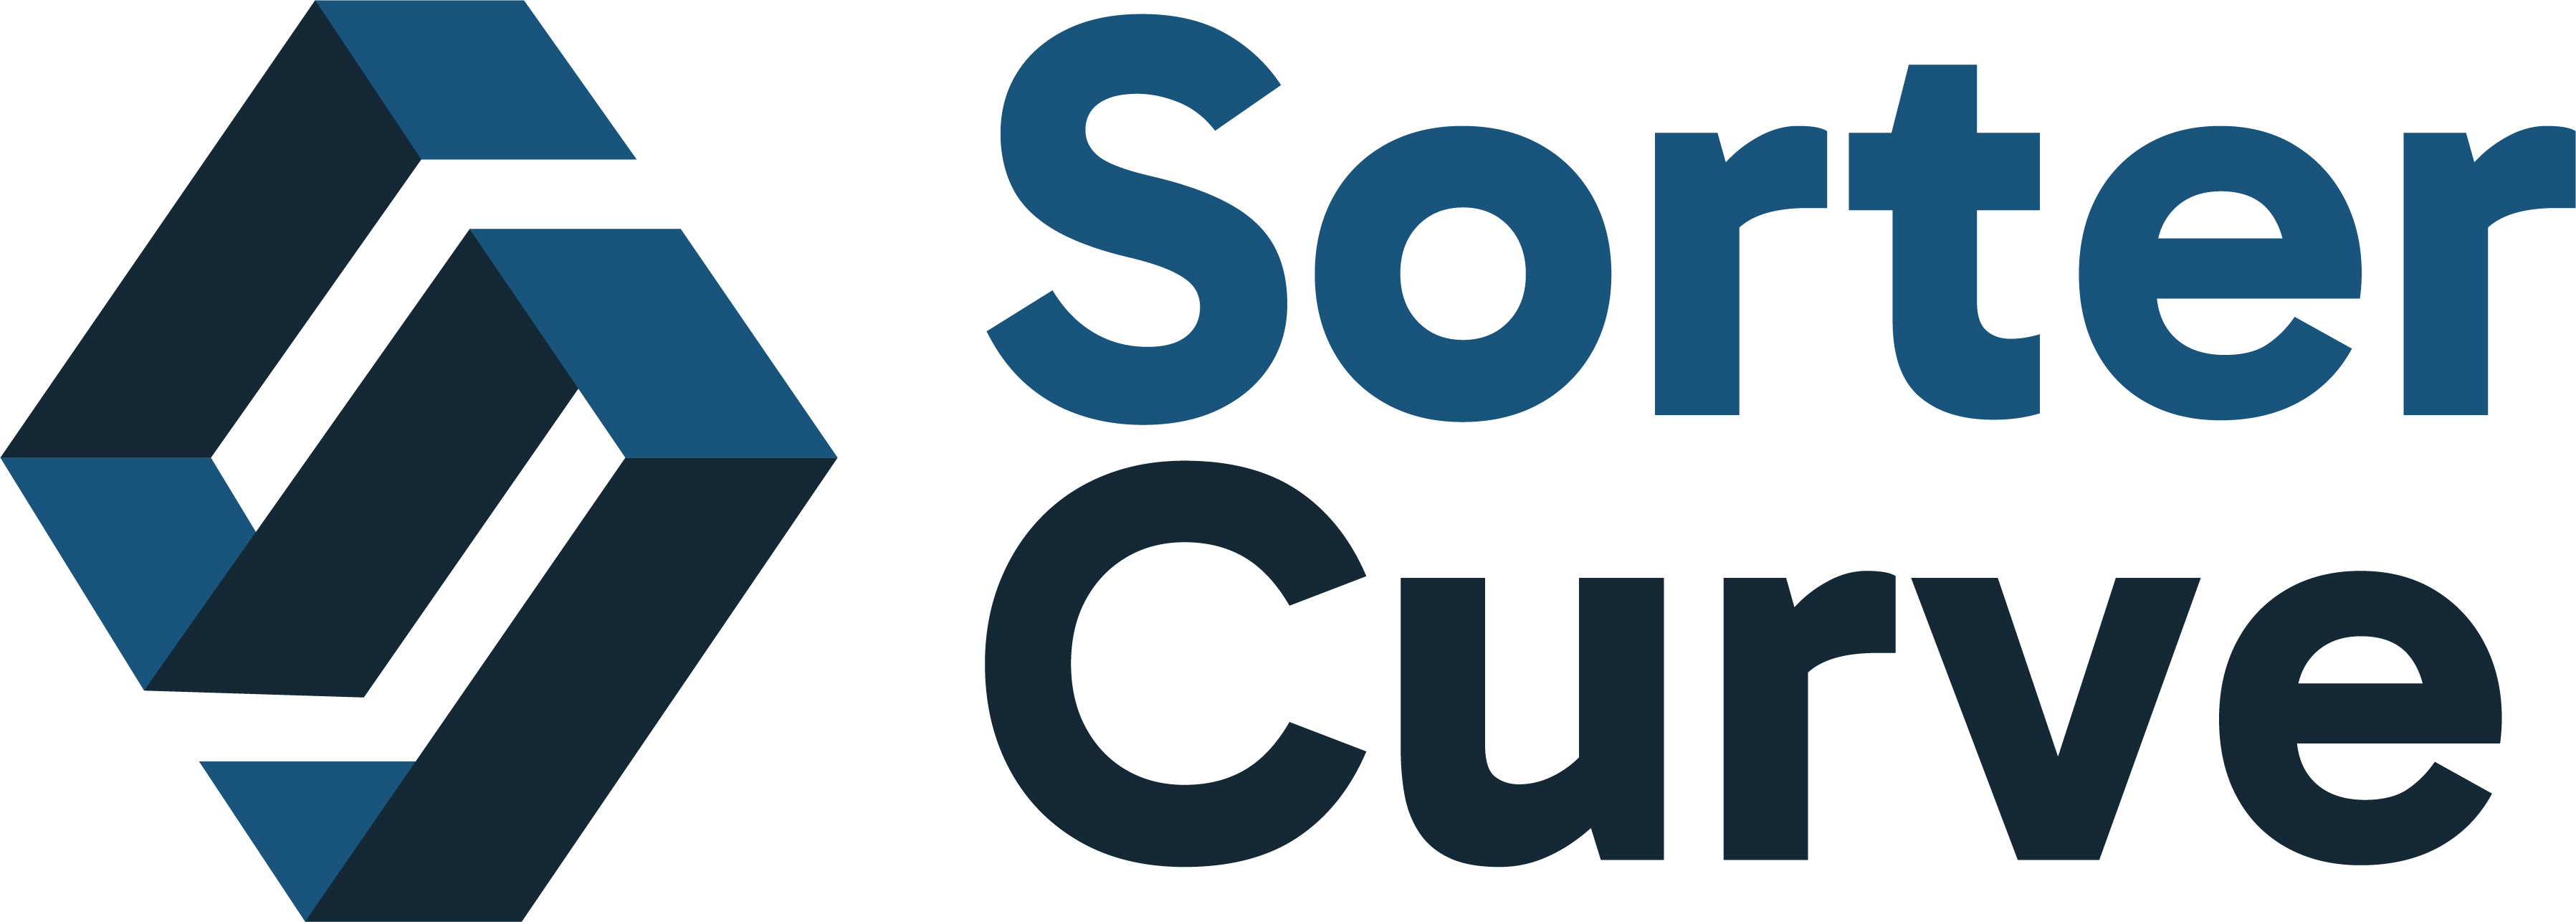 Logo Sorter Curve